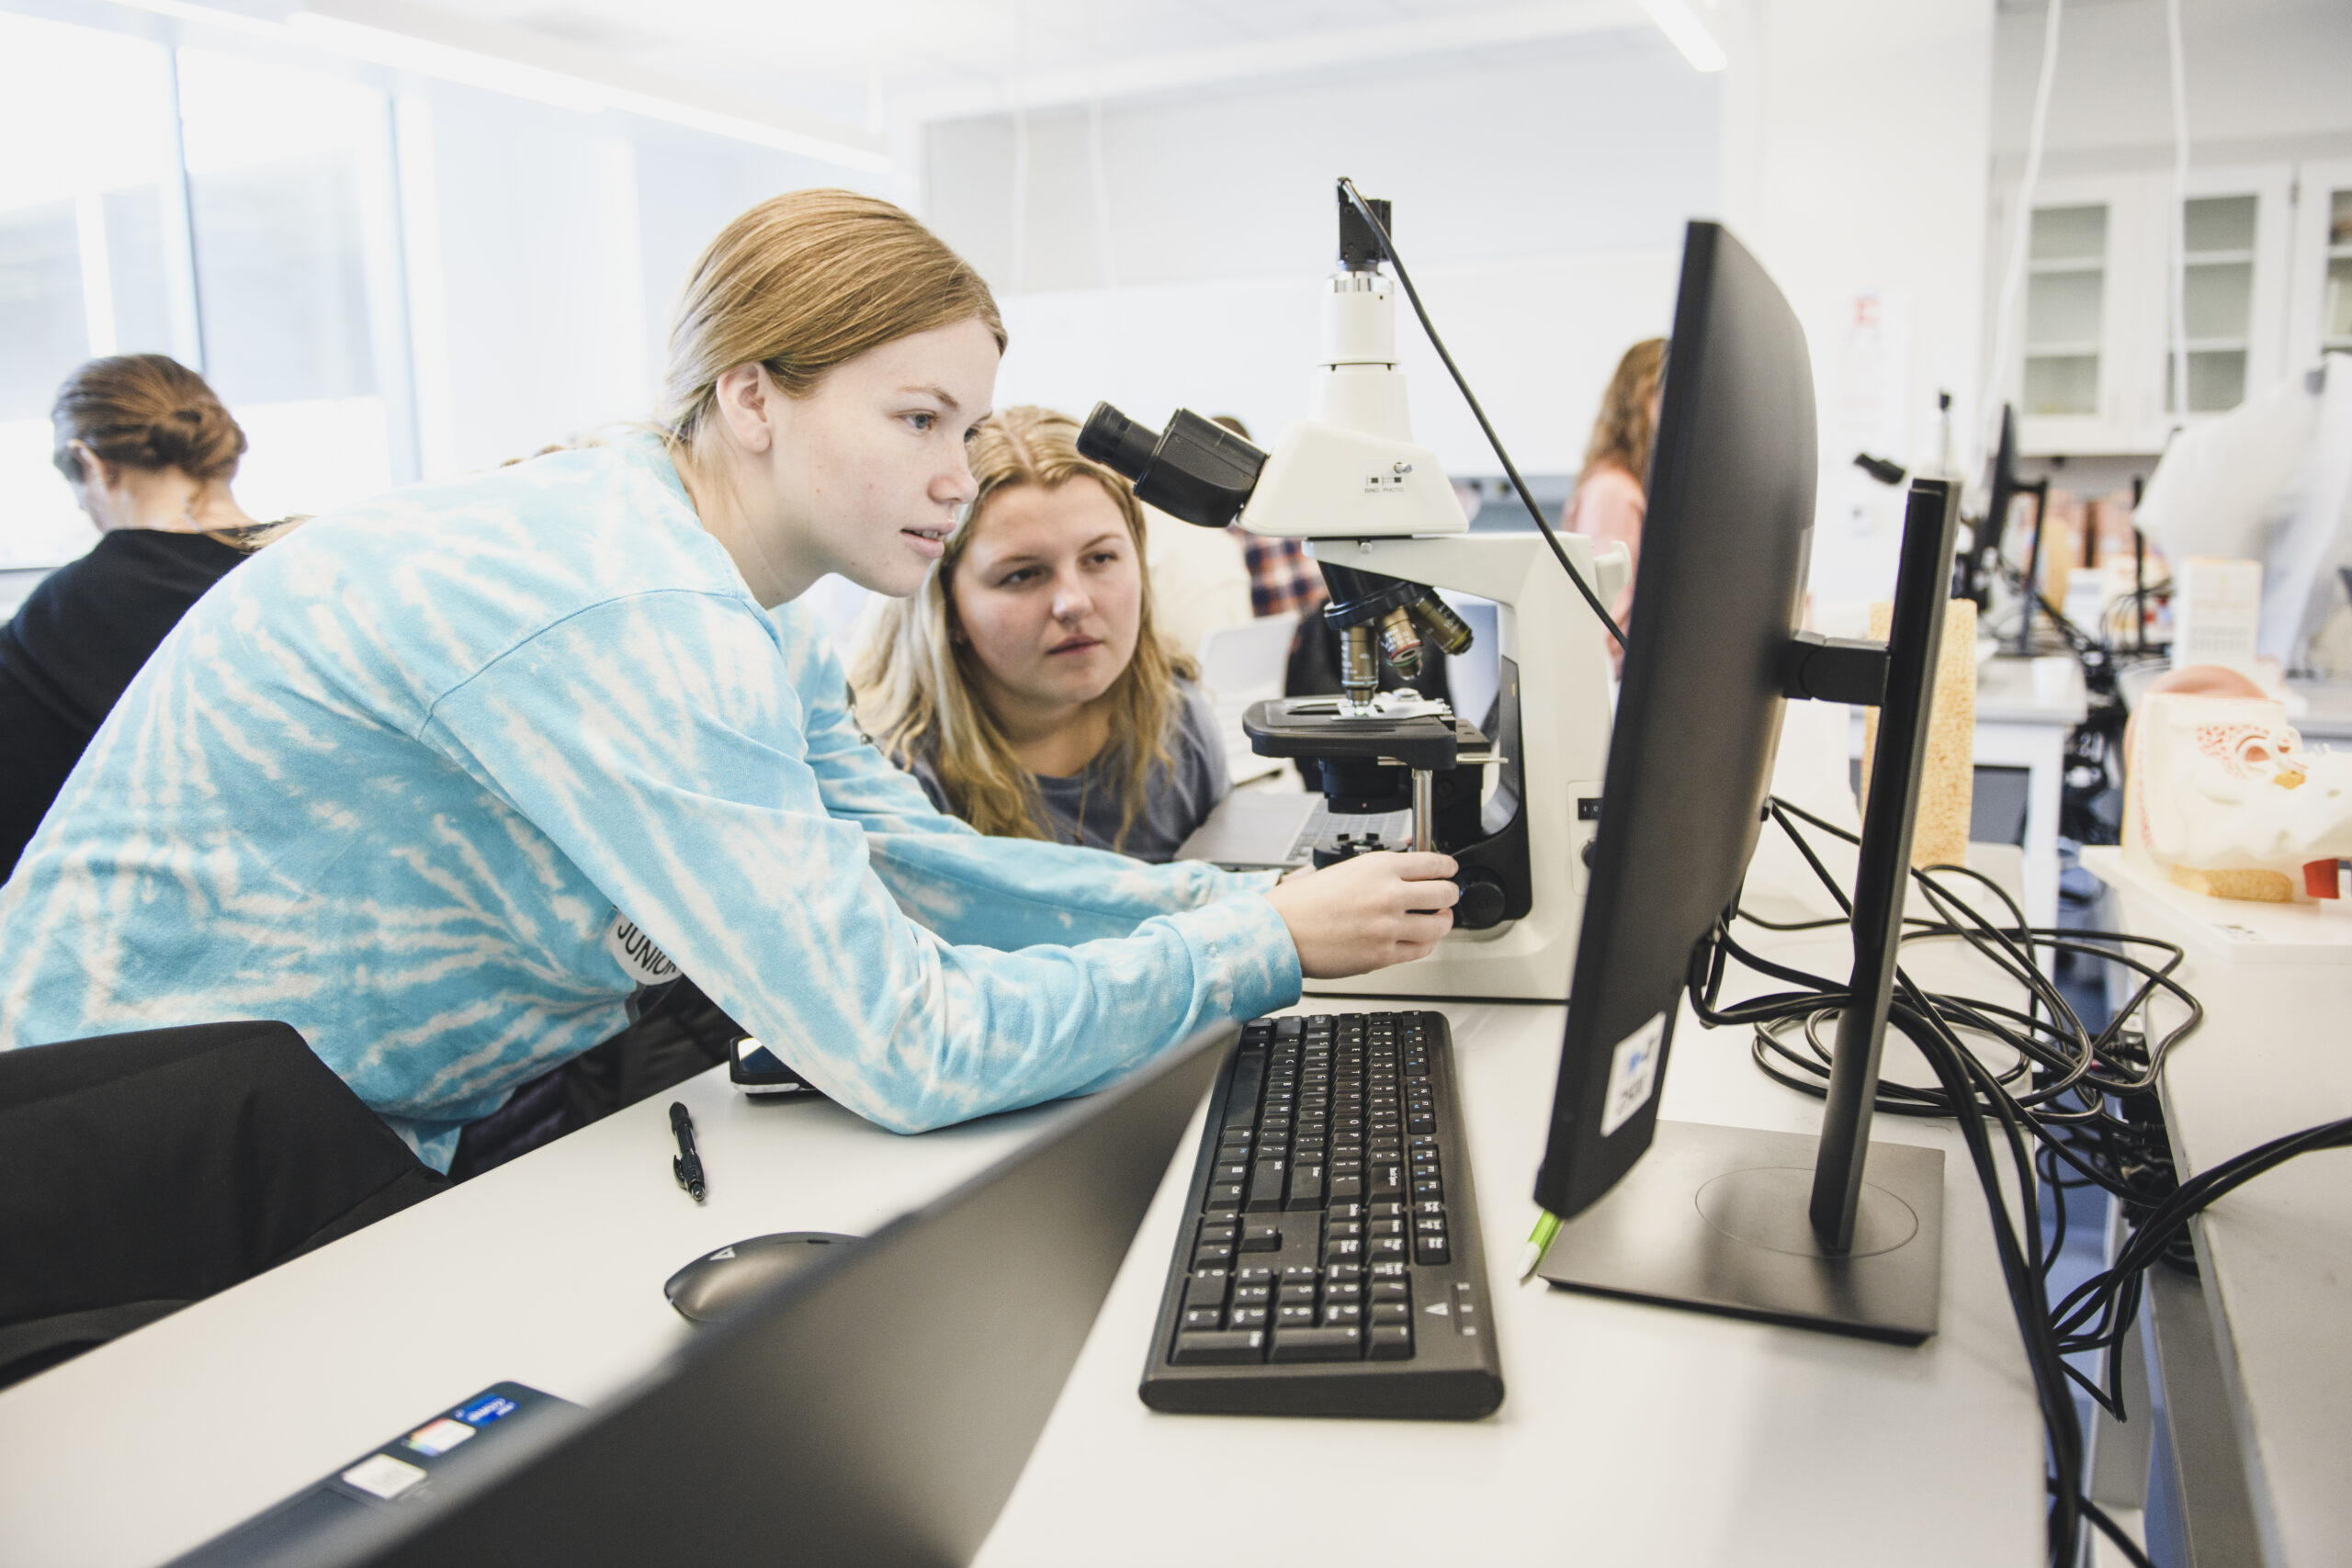 Student Microscope computing